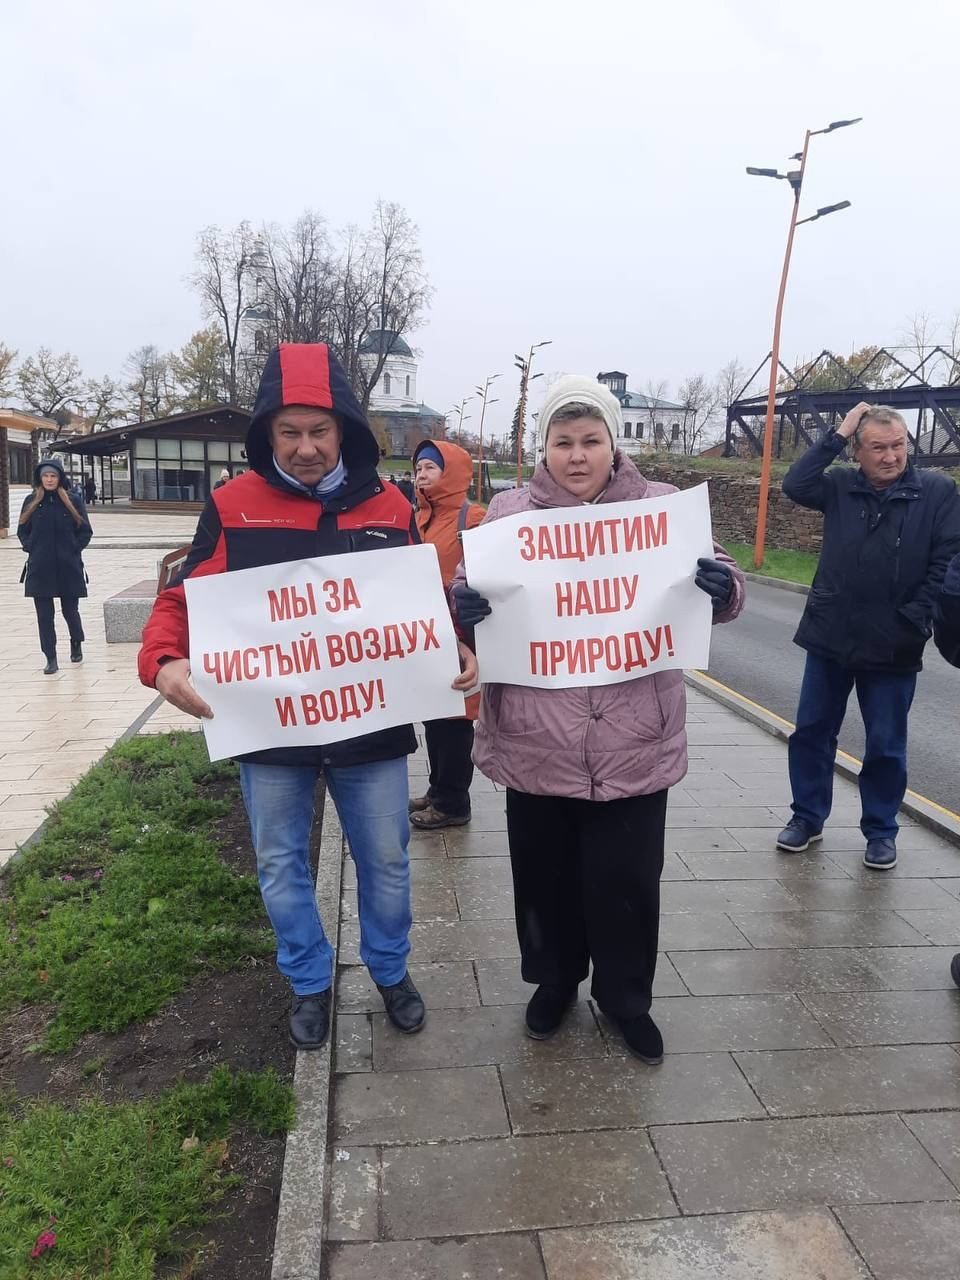 Митинги против строительства. Митинг против строительства. Челябинск протест против постройки завода.